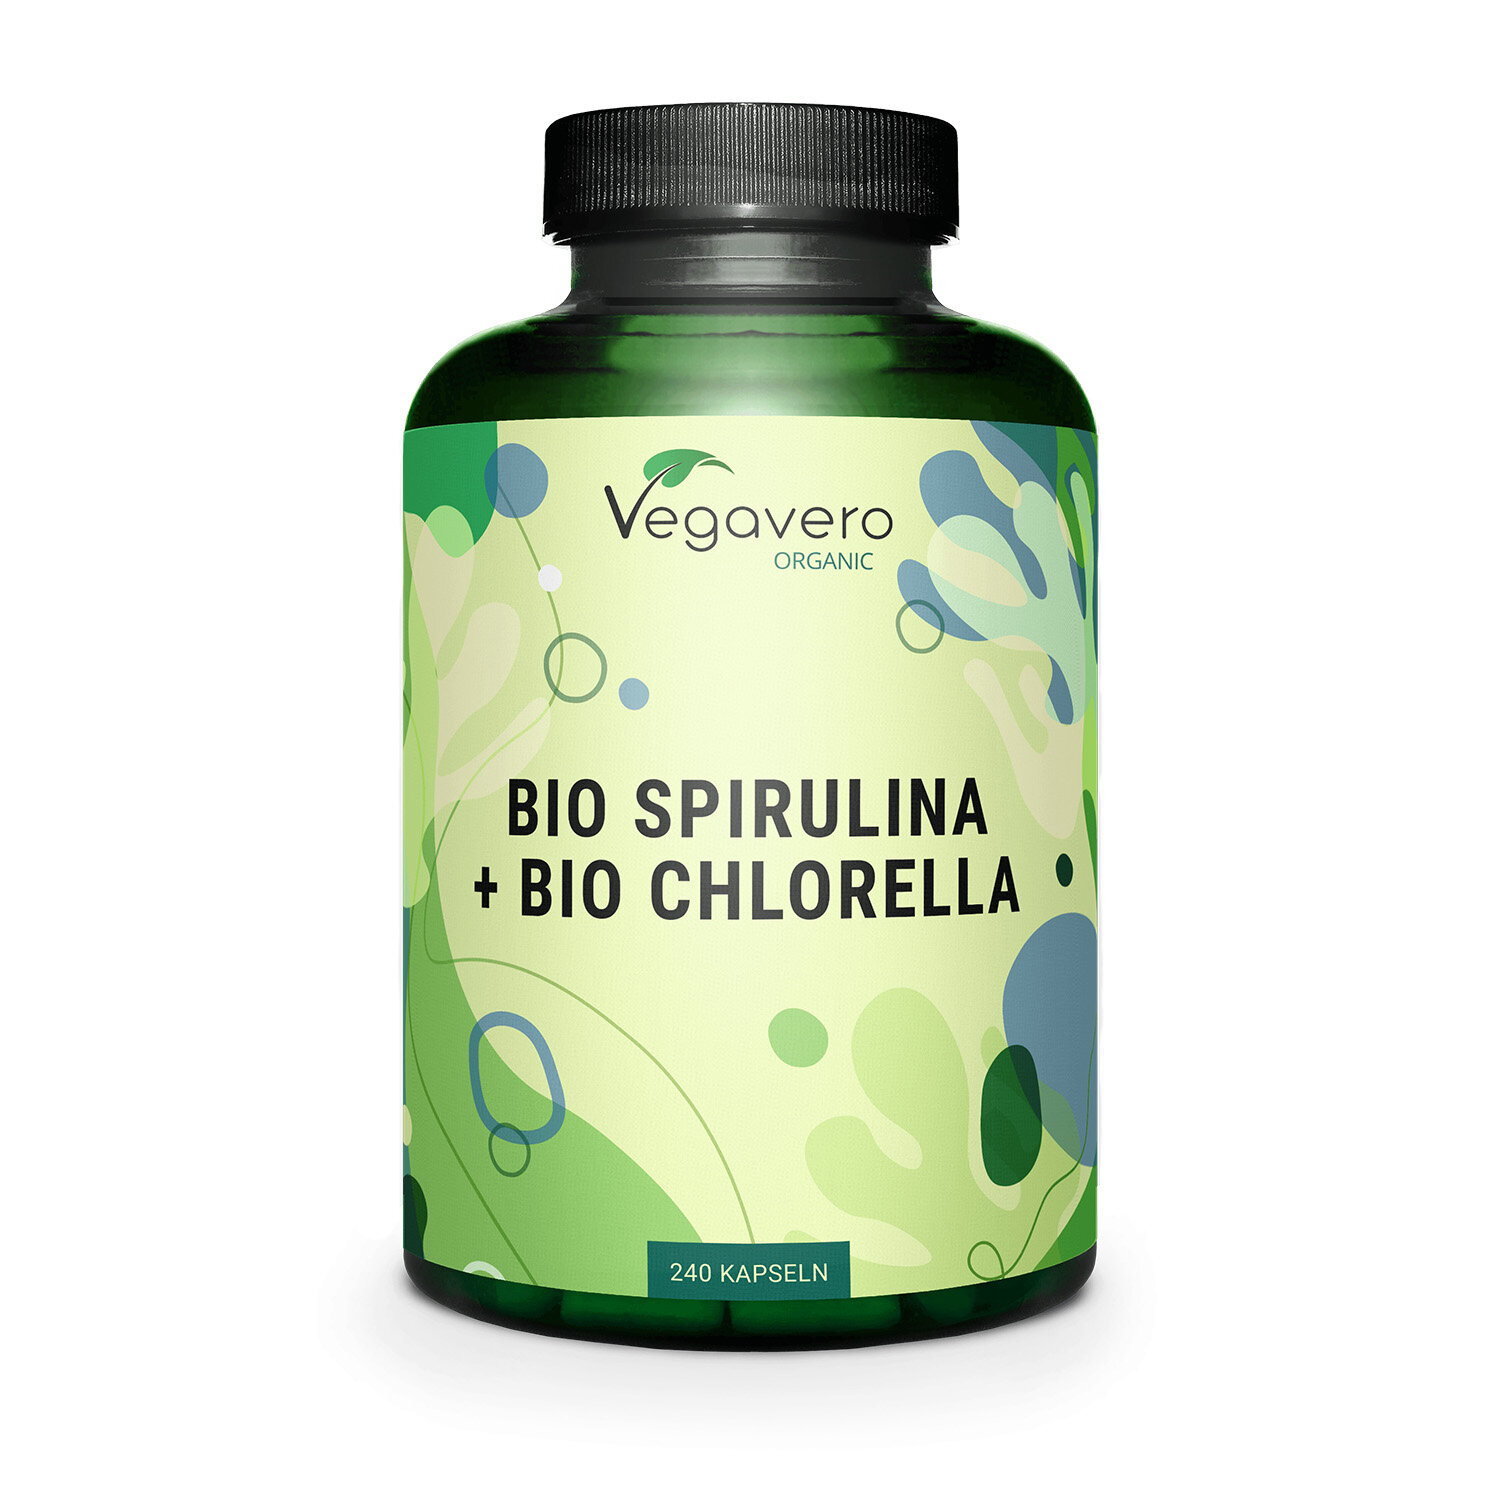 Vegavero Bio Chlorella + Spirulina | 240 Kapseln | Hochwertige Mikroalgen für Vitalität | Vegan & Geprüft